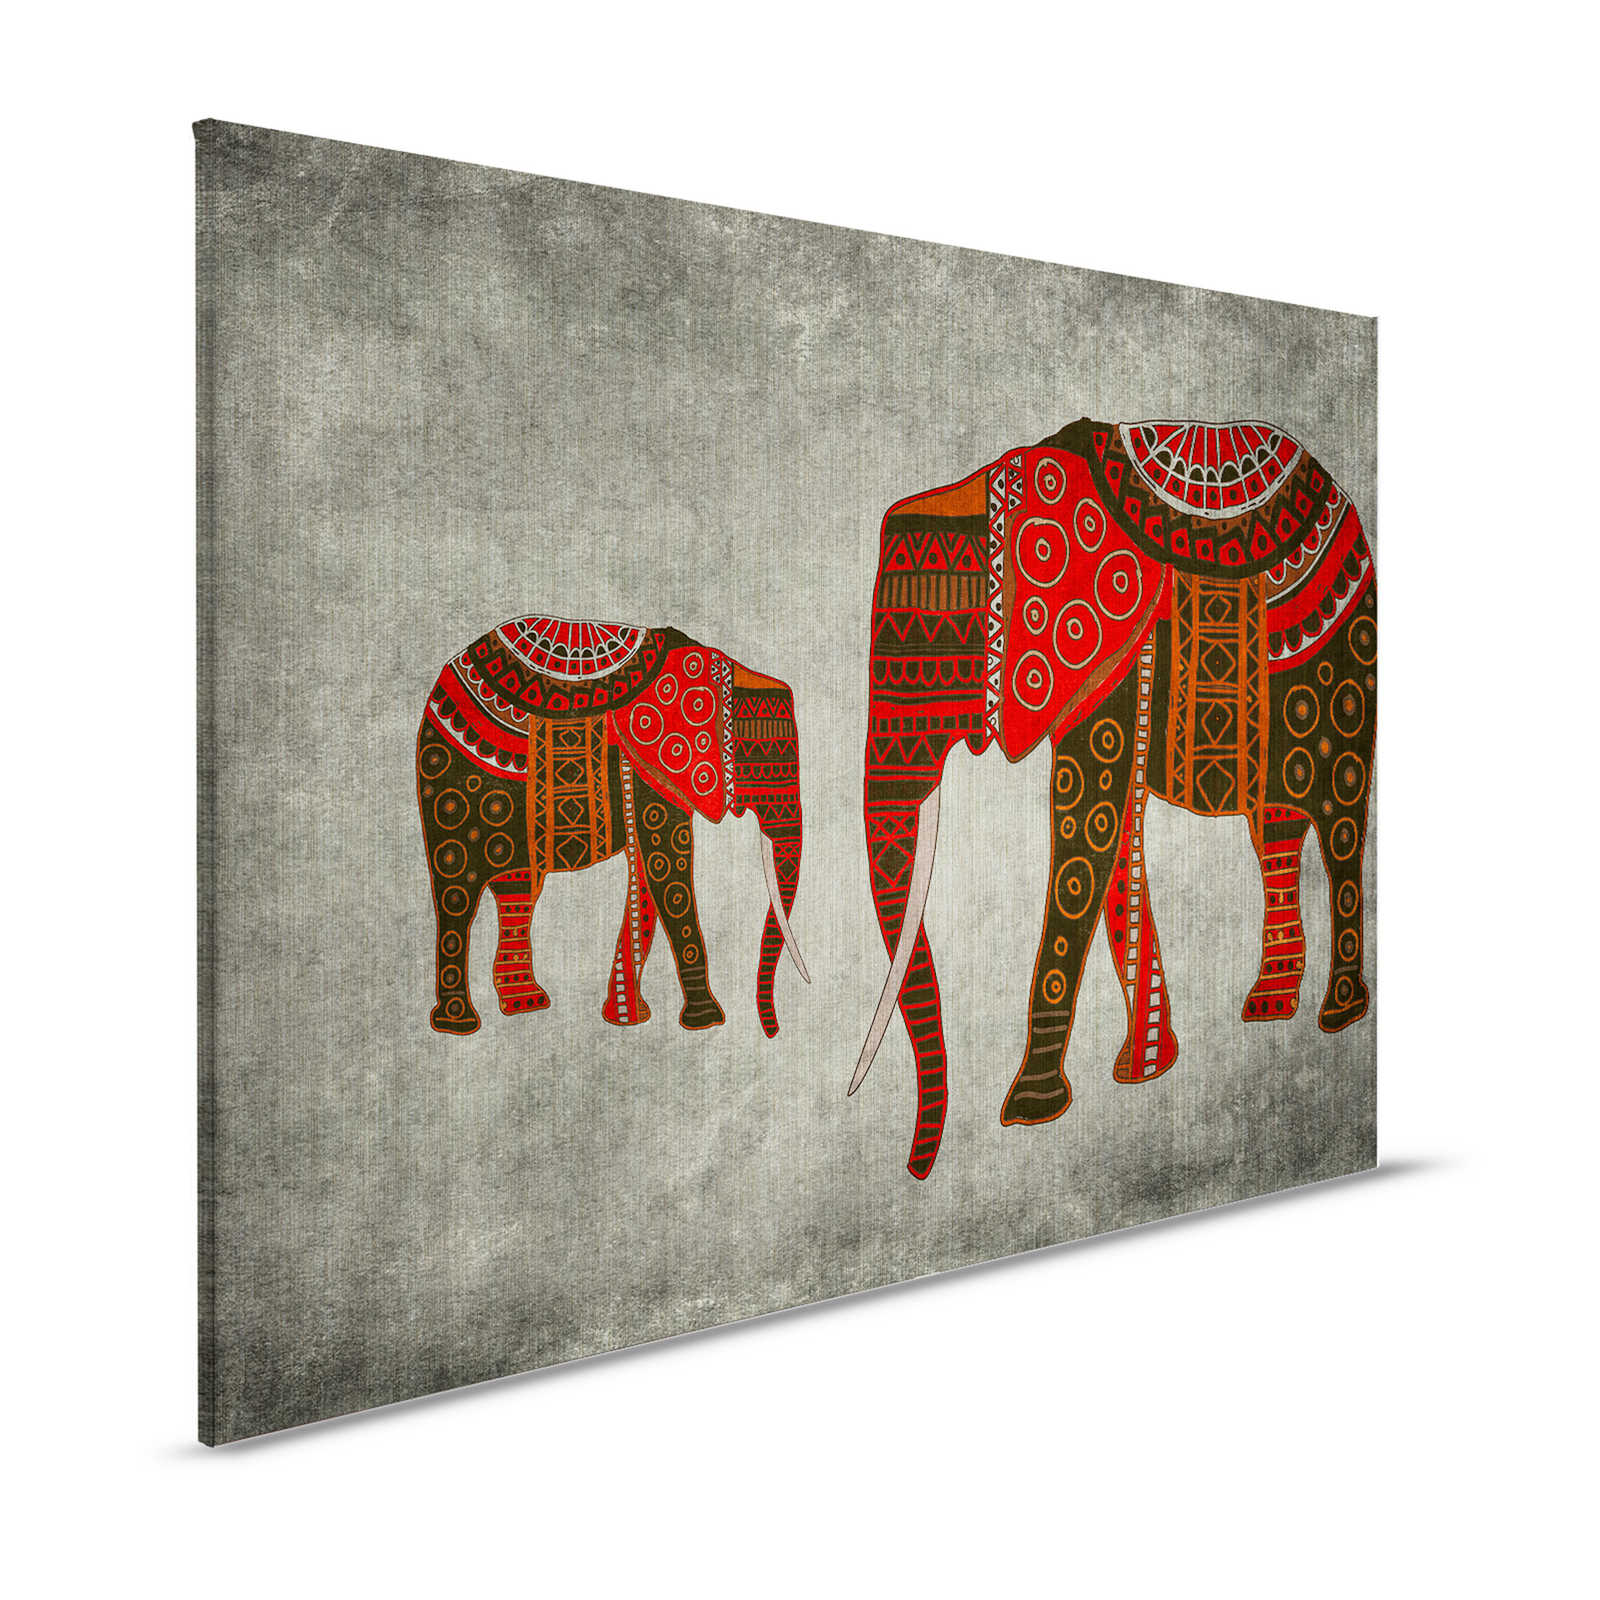 Nairobi 4 - Elefanten Leinwandbild mit Ethno Mustern – 1,20 m x 0,80 m
